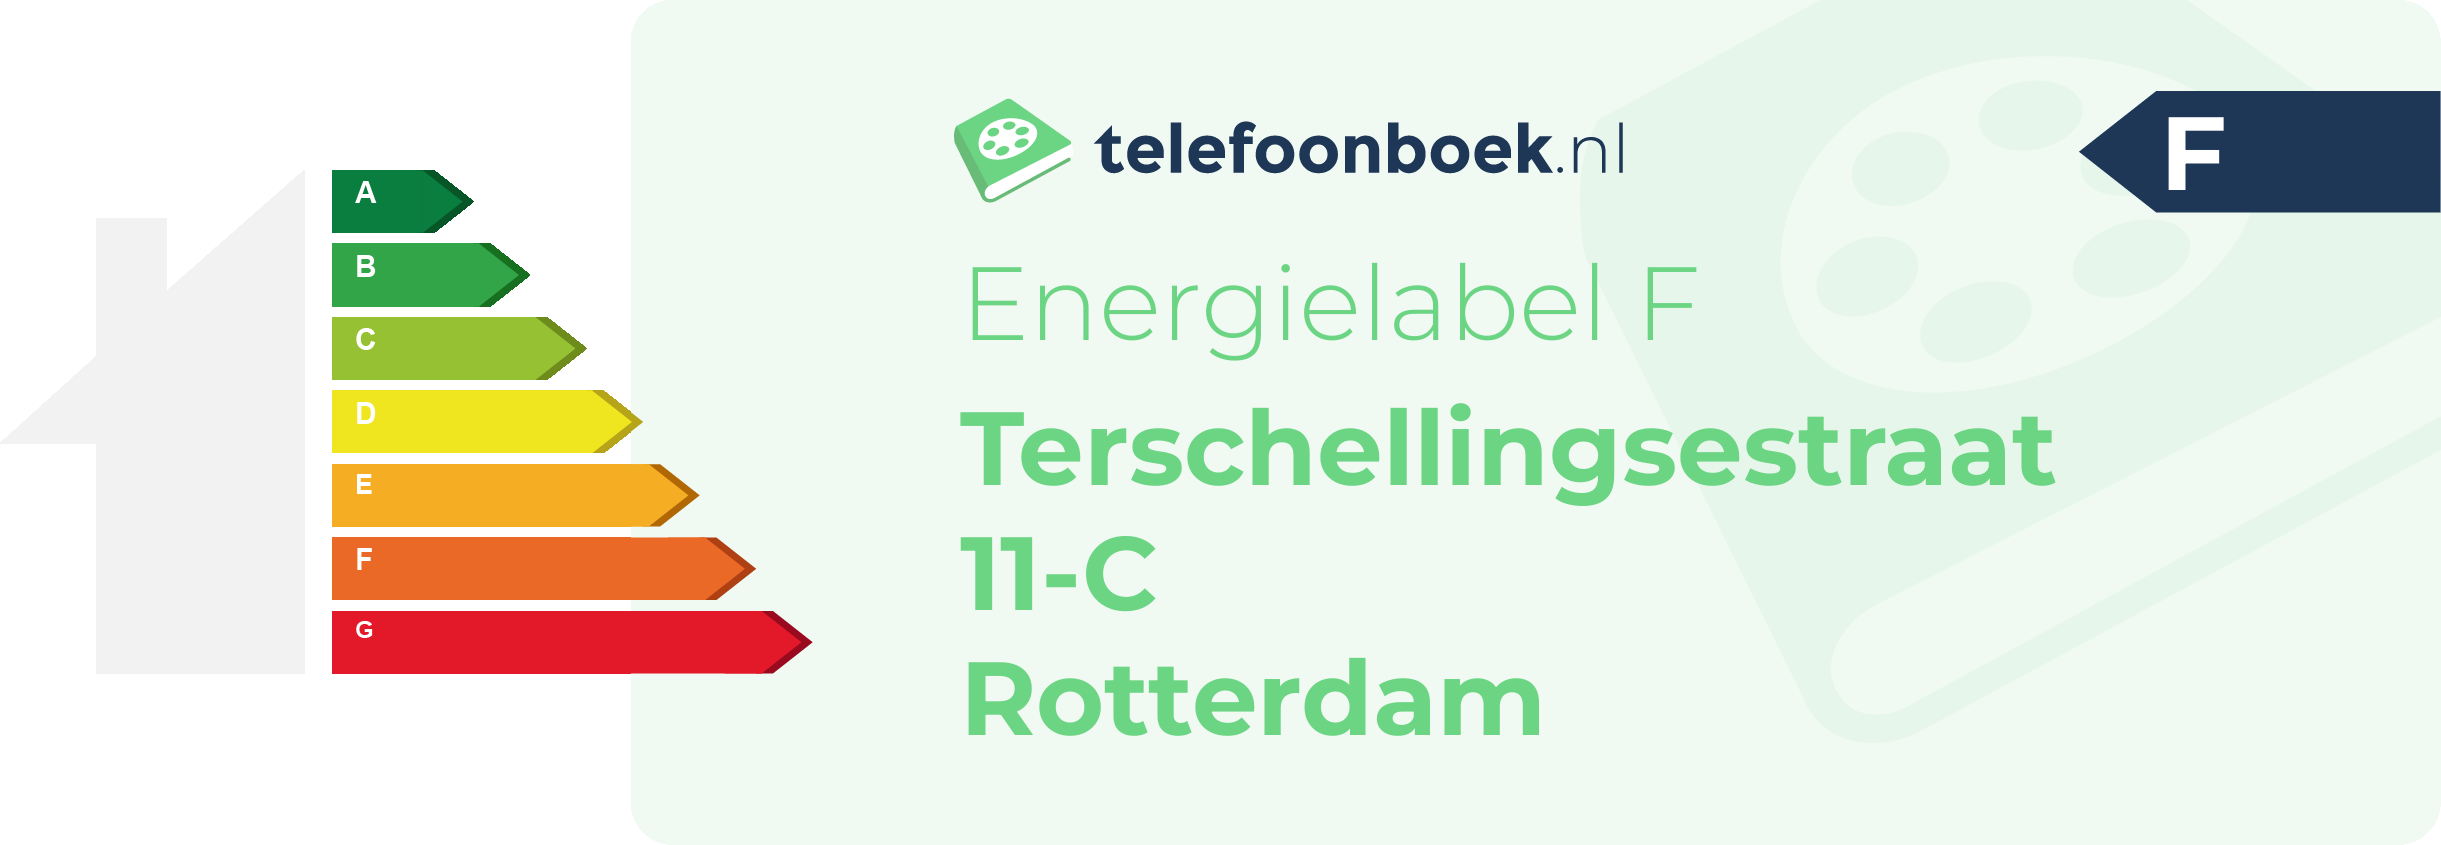 Energielabel Terschellingsestraat 11-C Rotterdam